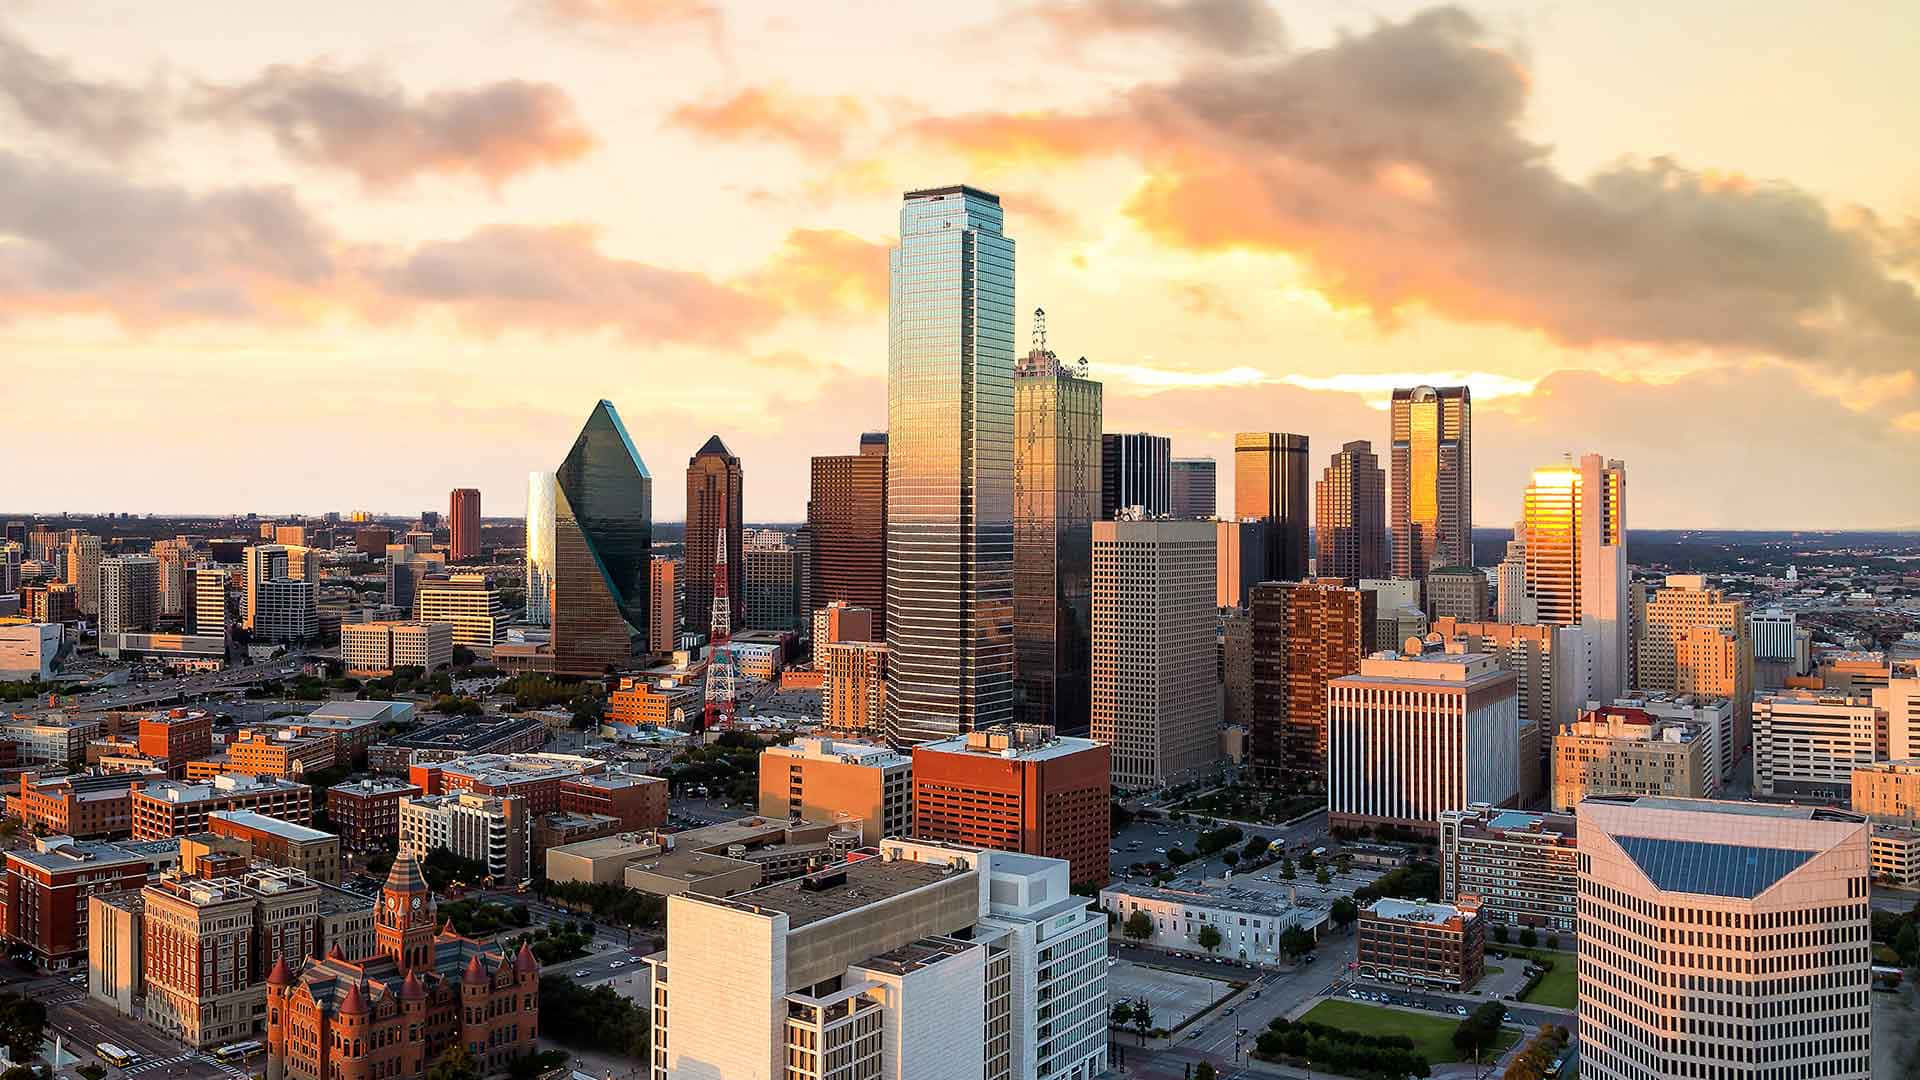 The City Skyline Of Dallas, Texas